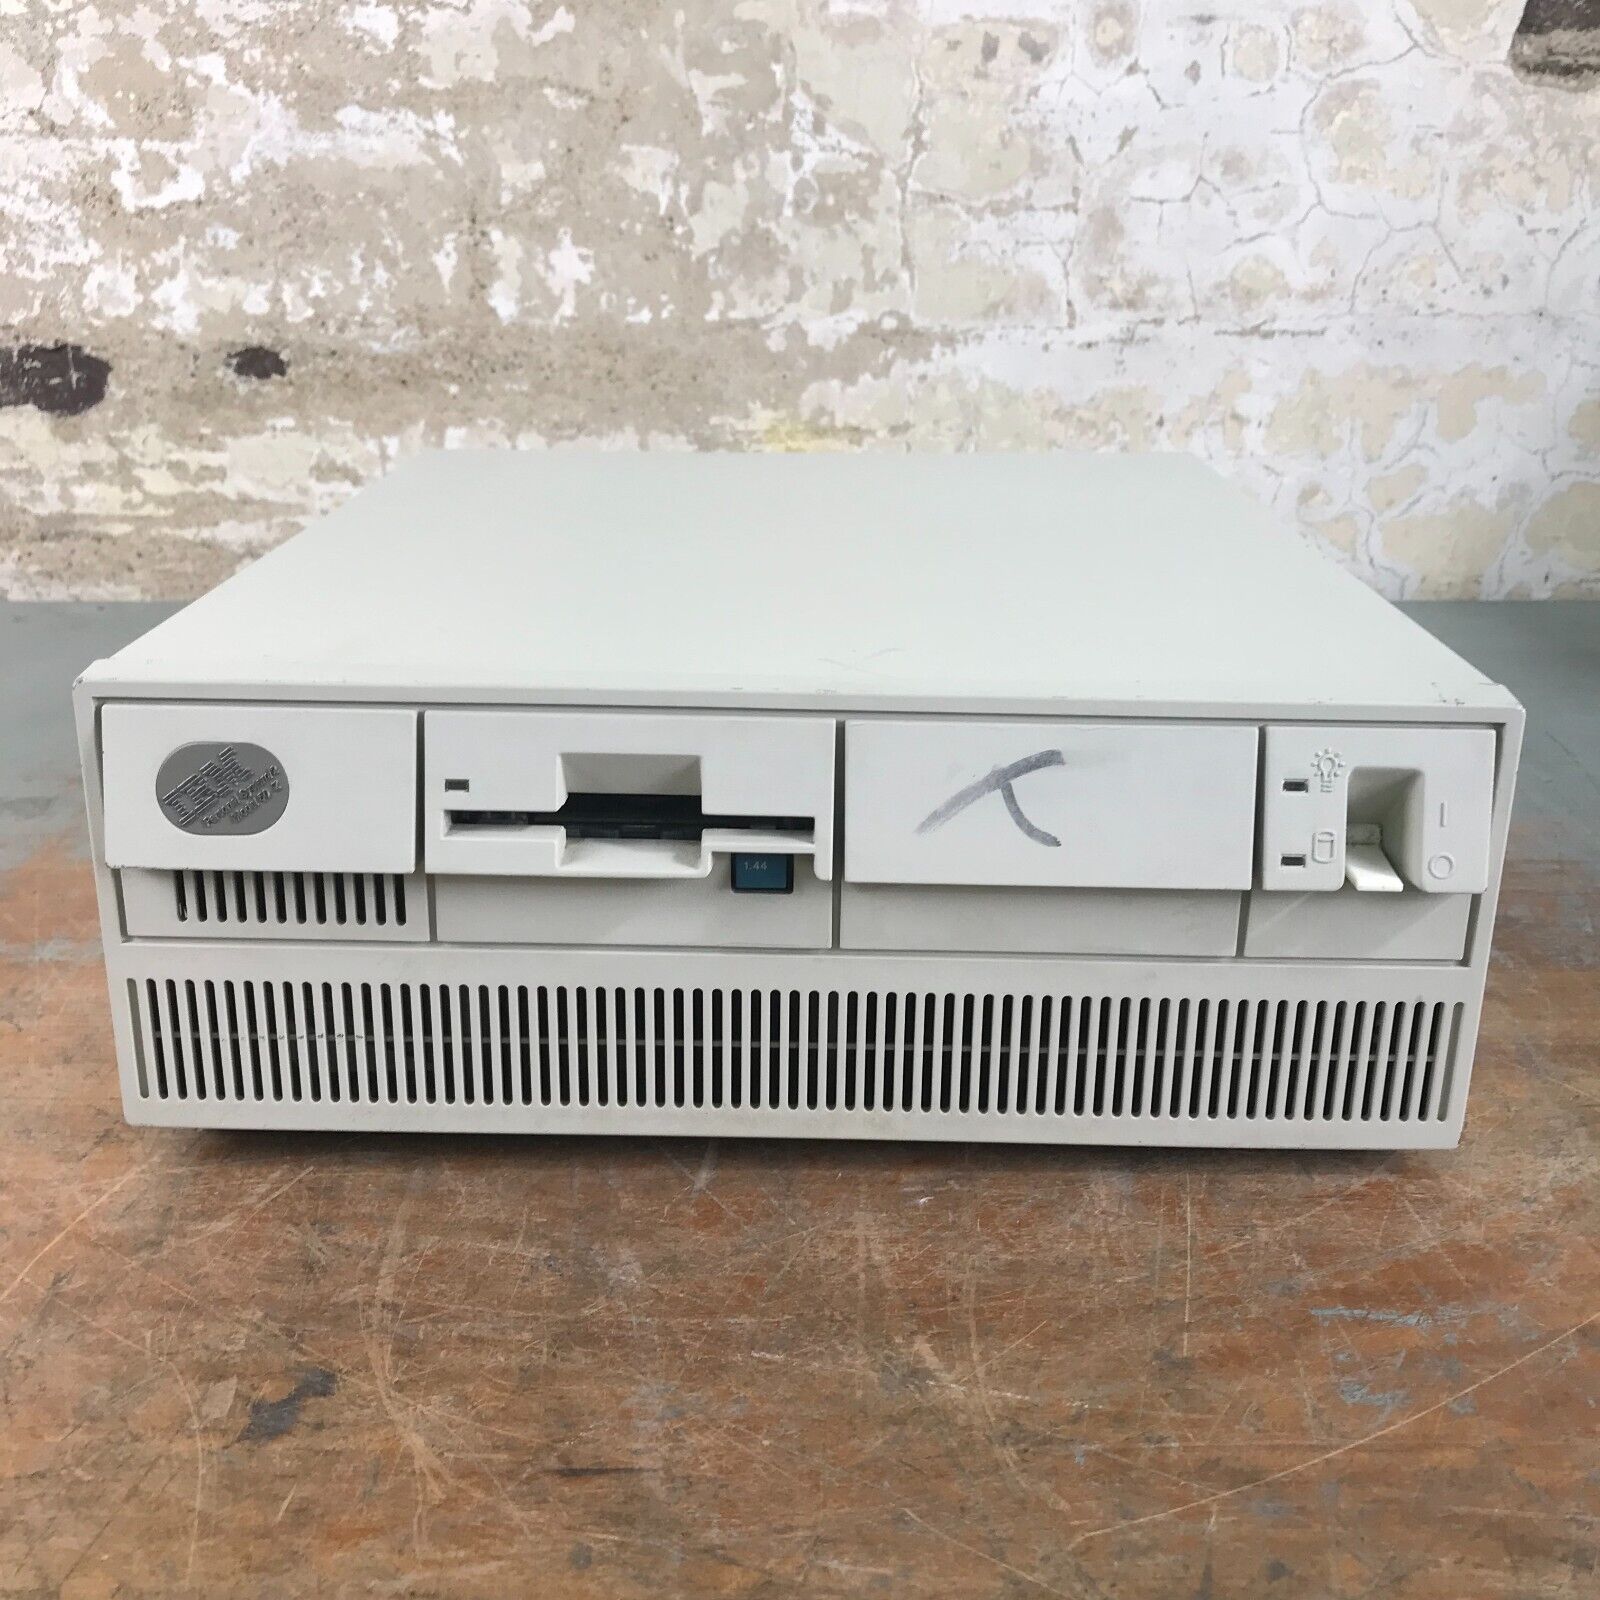 IBM PS/2 Model 50 Z Computer 8550 **Great Restoration Candidate - Complete